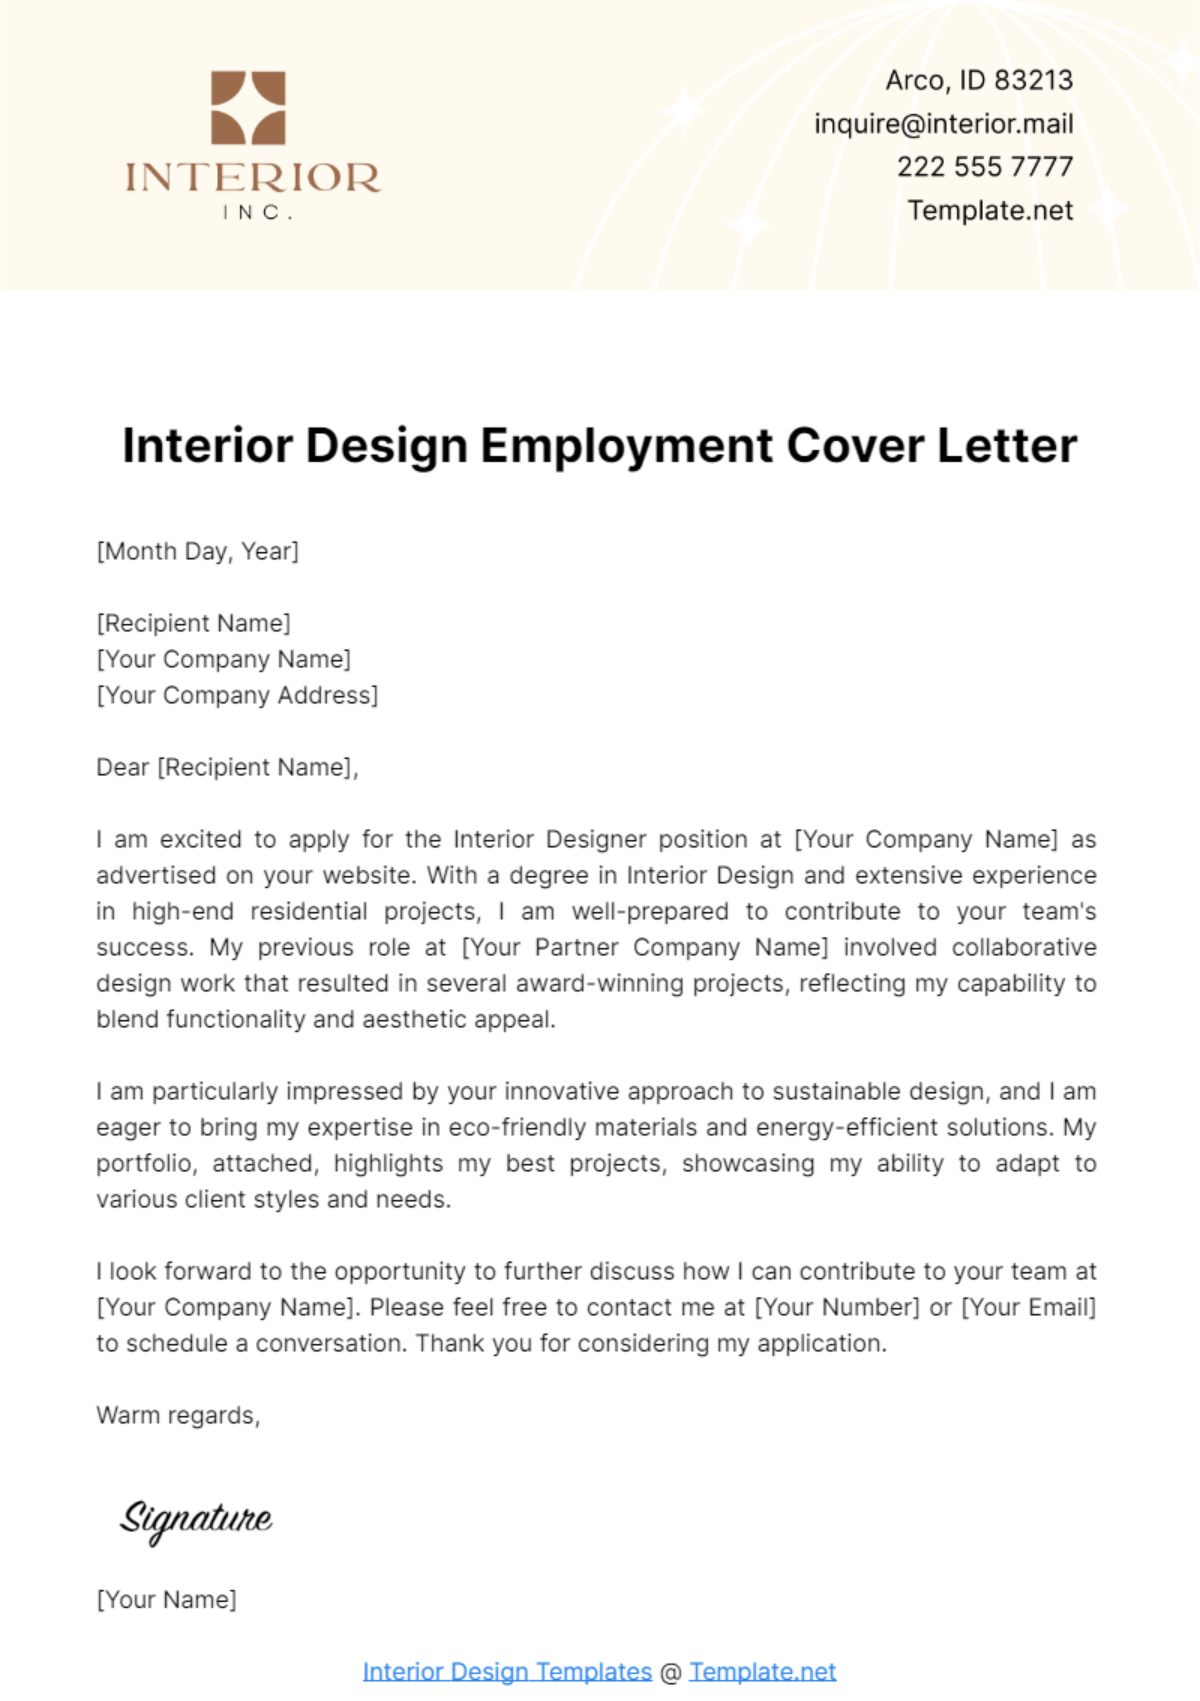 Interior Design Employment Cover Letter Template